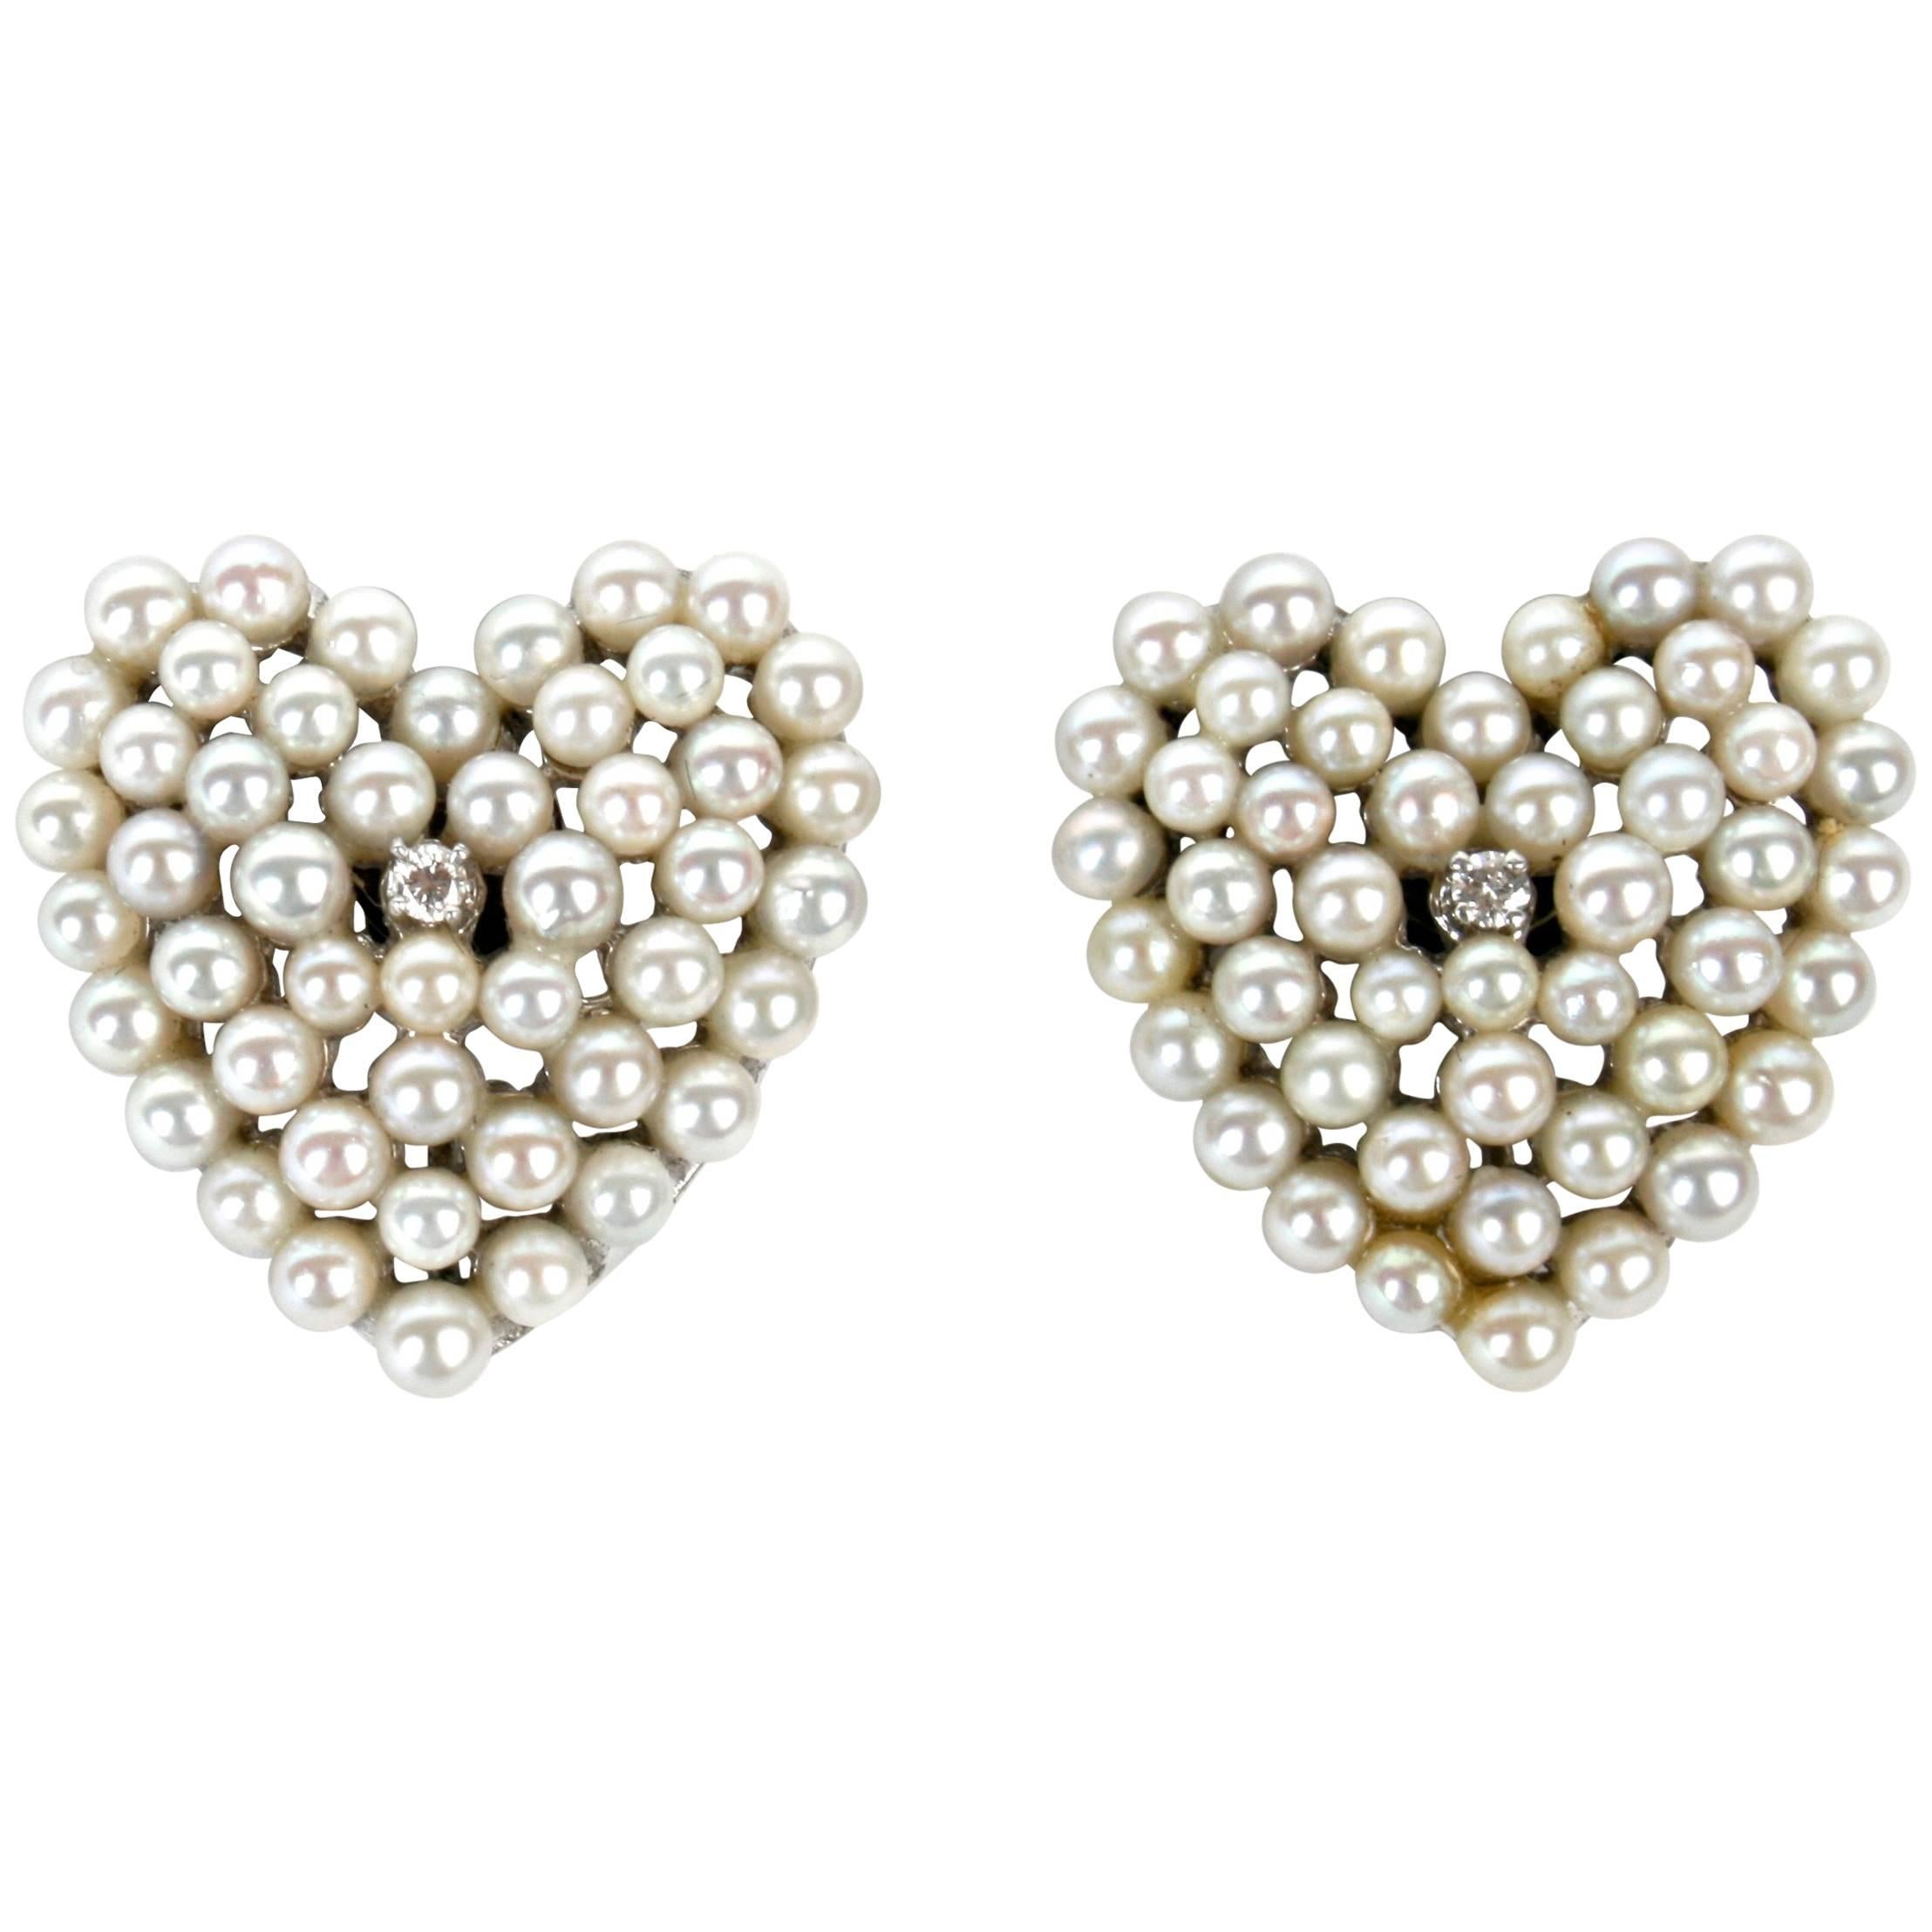 Pearl and Diamond Heart Shaped Earrings